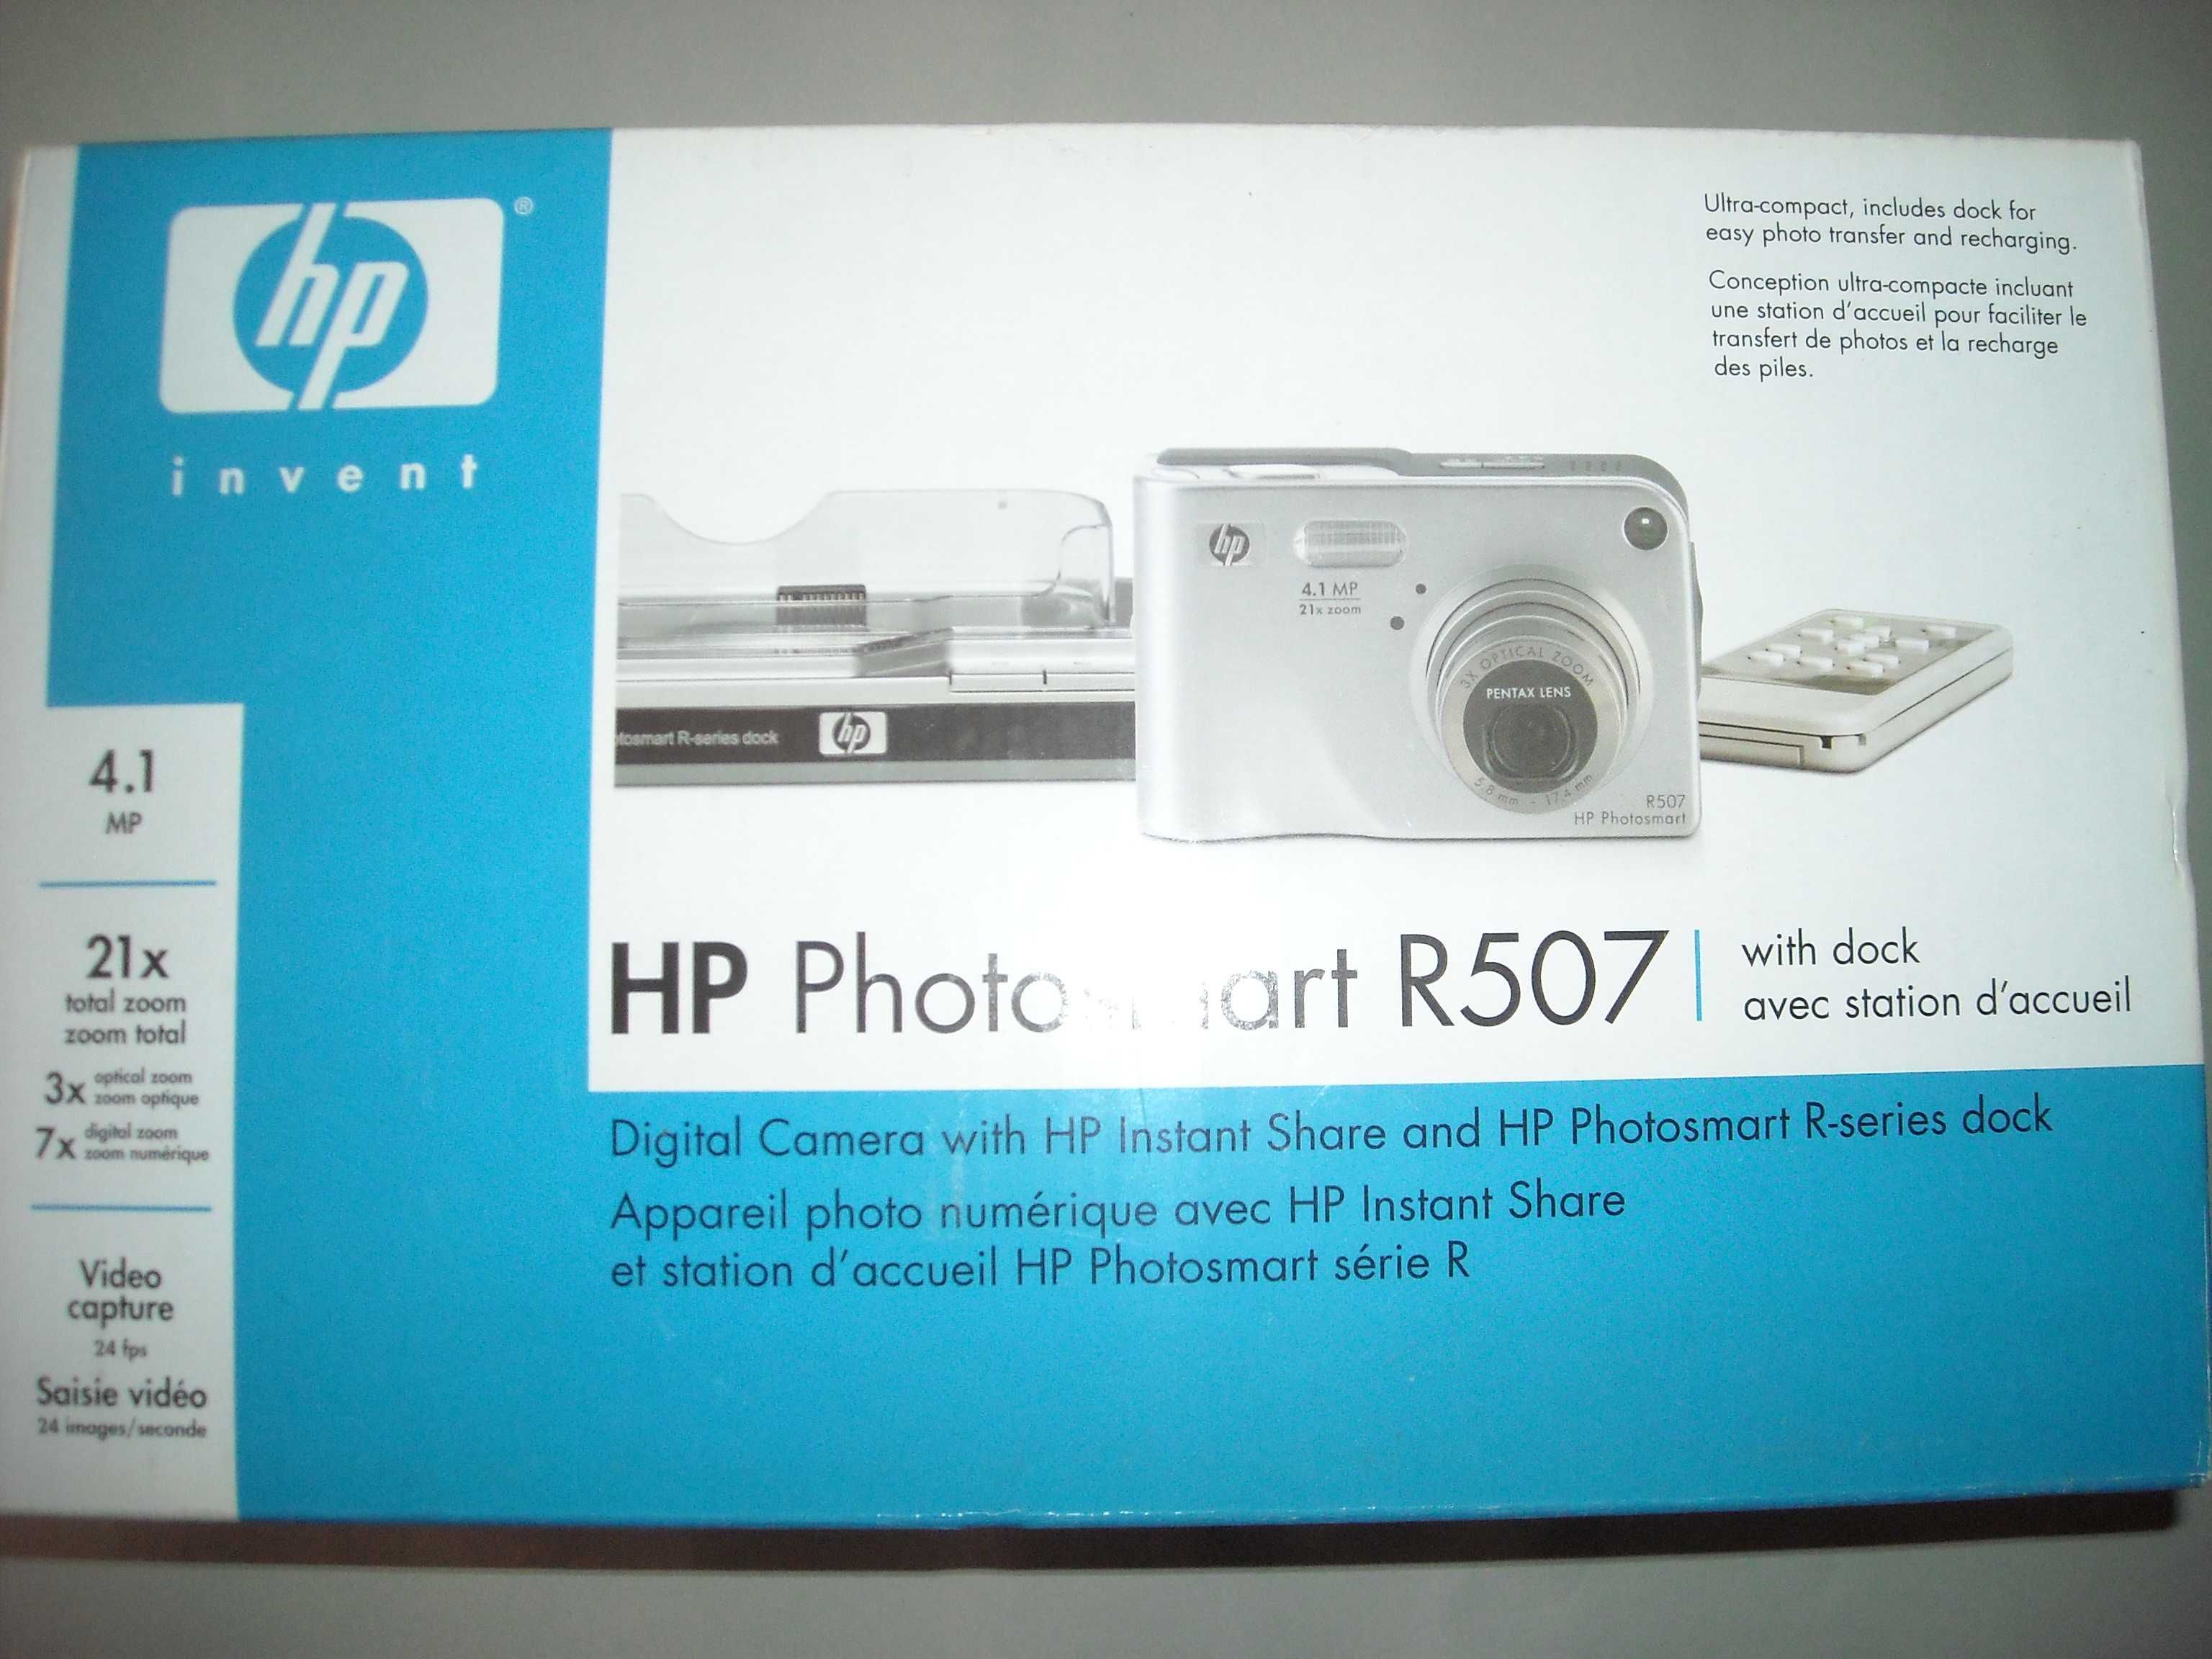 HP phtosmart r507 5mp